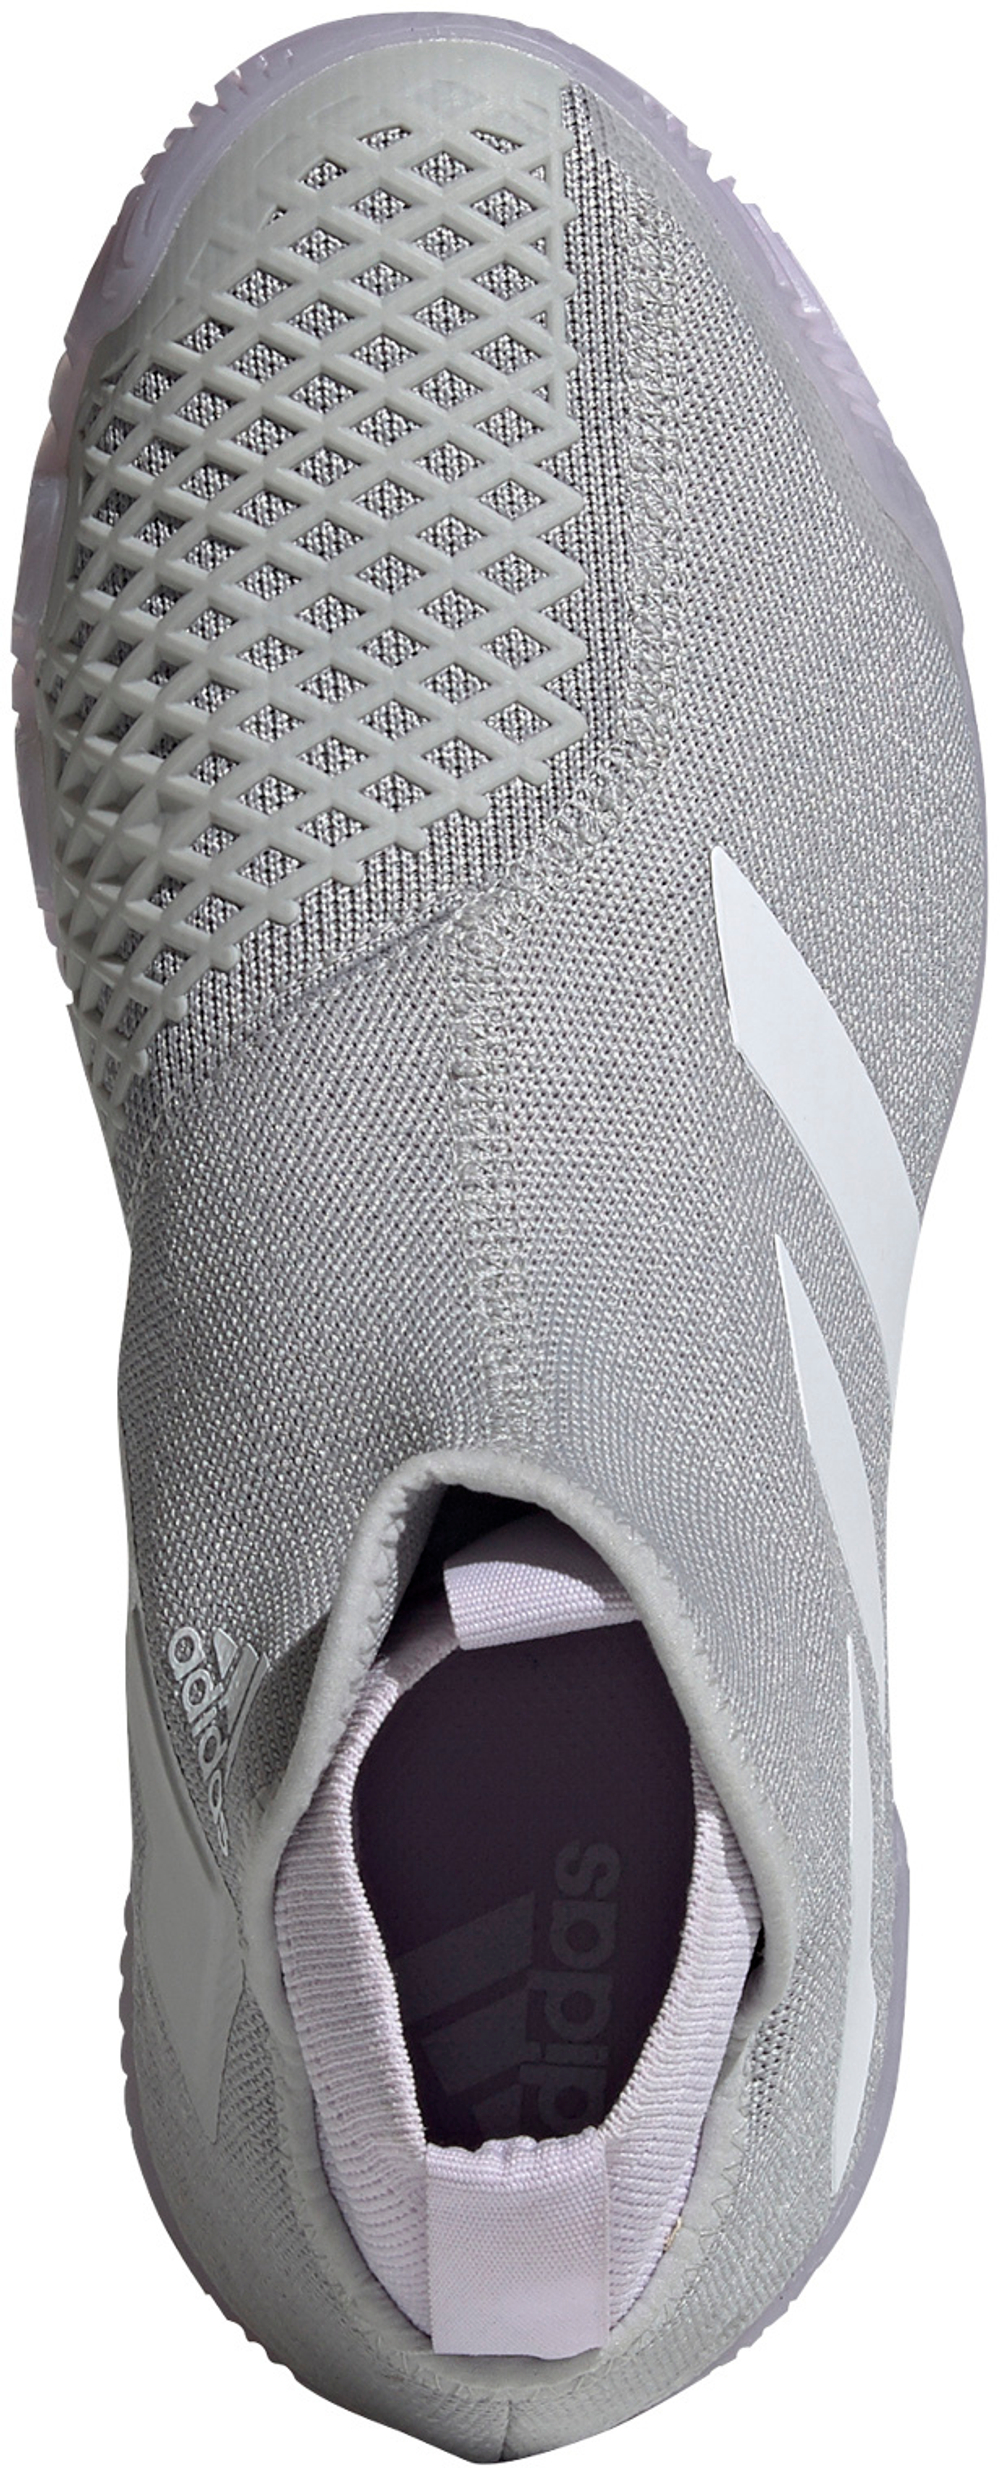 Женские теннисные кроссовки Adidas Stycon Laceless W - grey two/cloud whie/purple tint